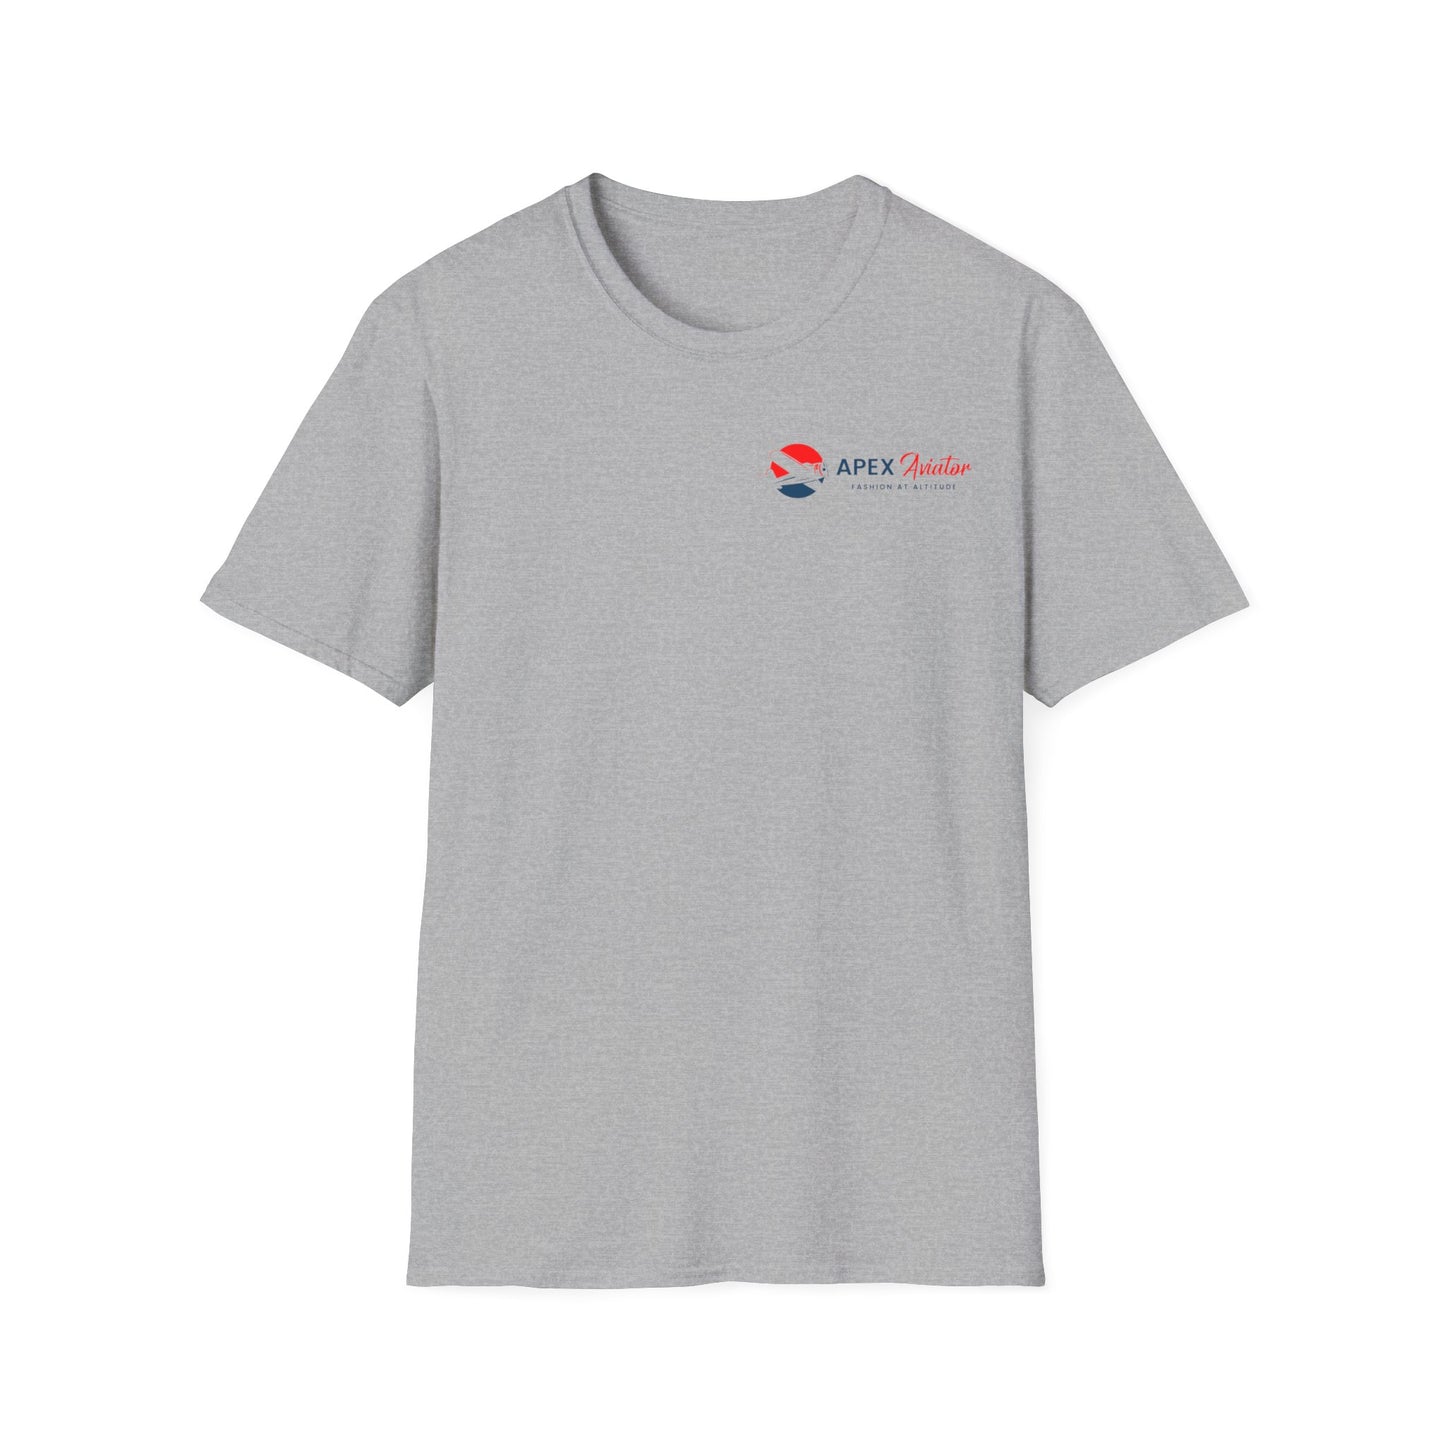 "Cloud Surfer"  T-Shirt